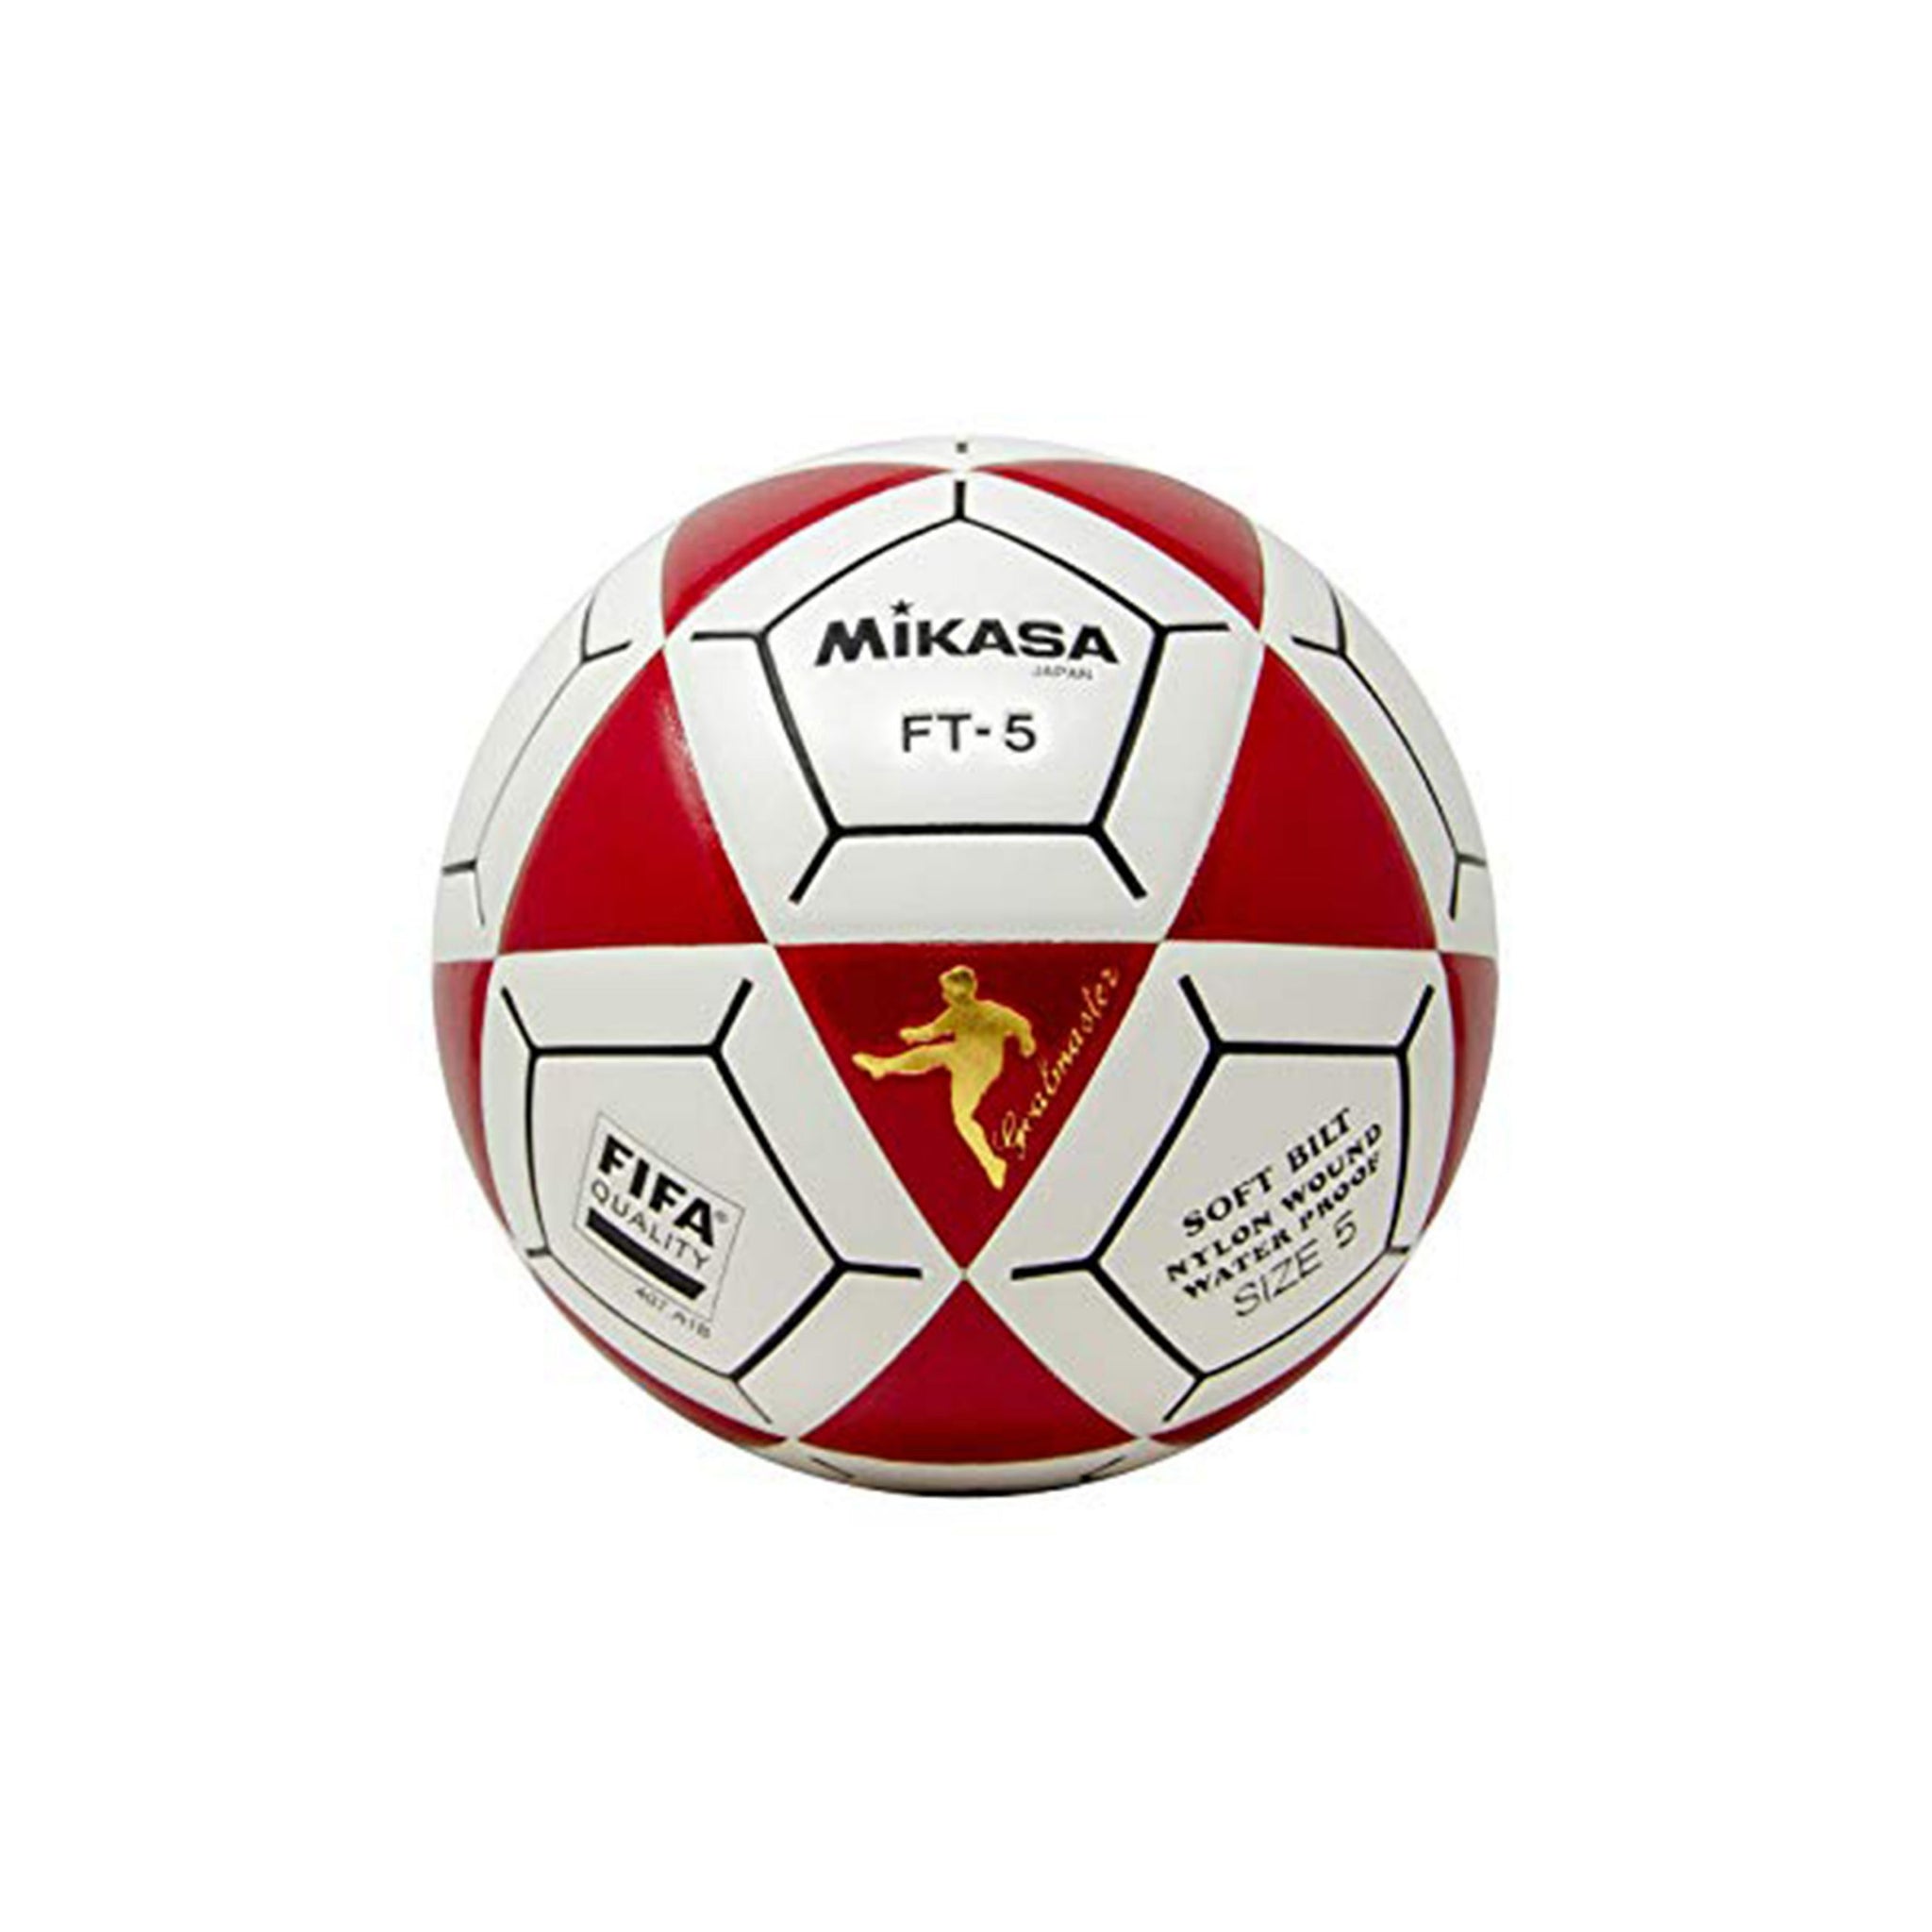 MIKASA FT - 5A Ball (Red & White)